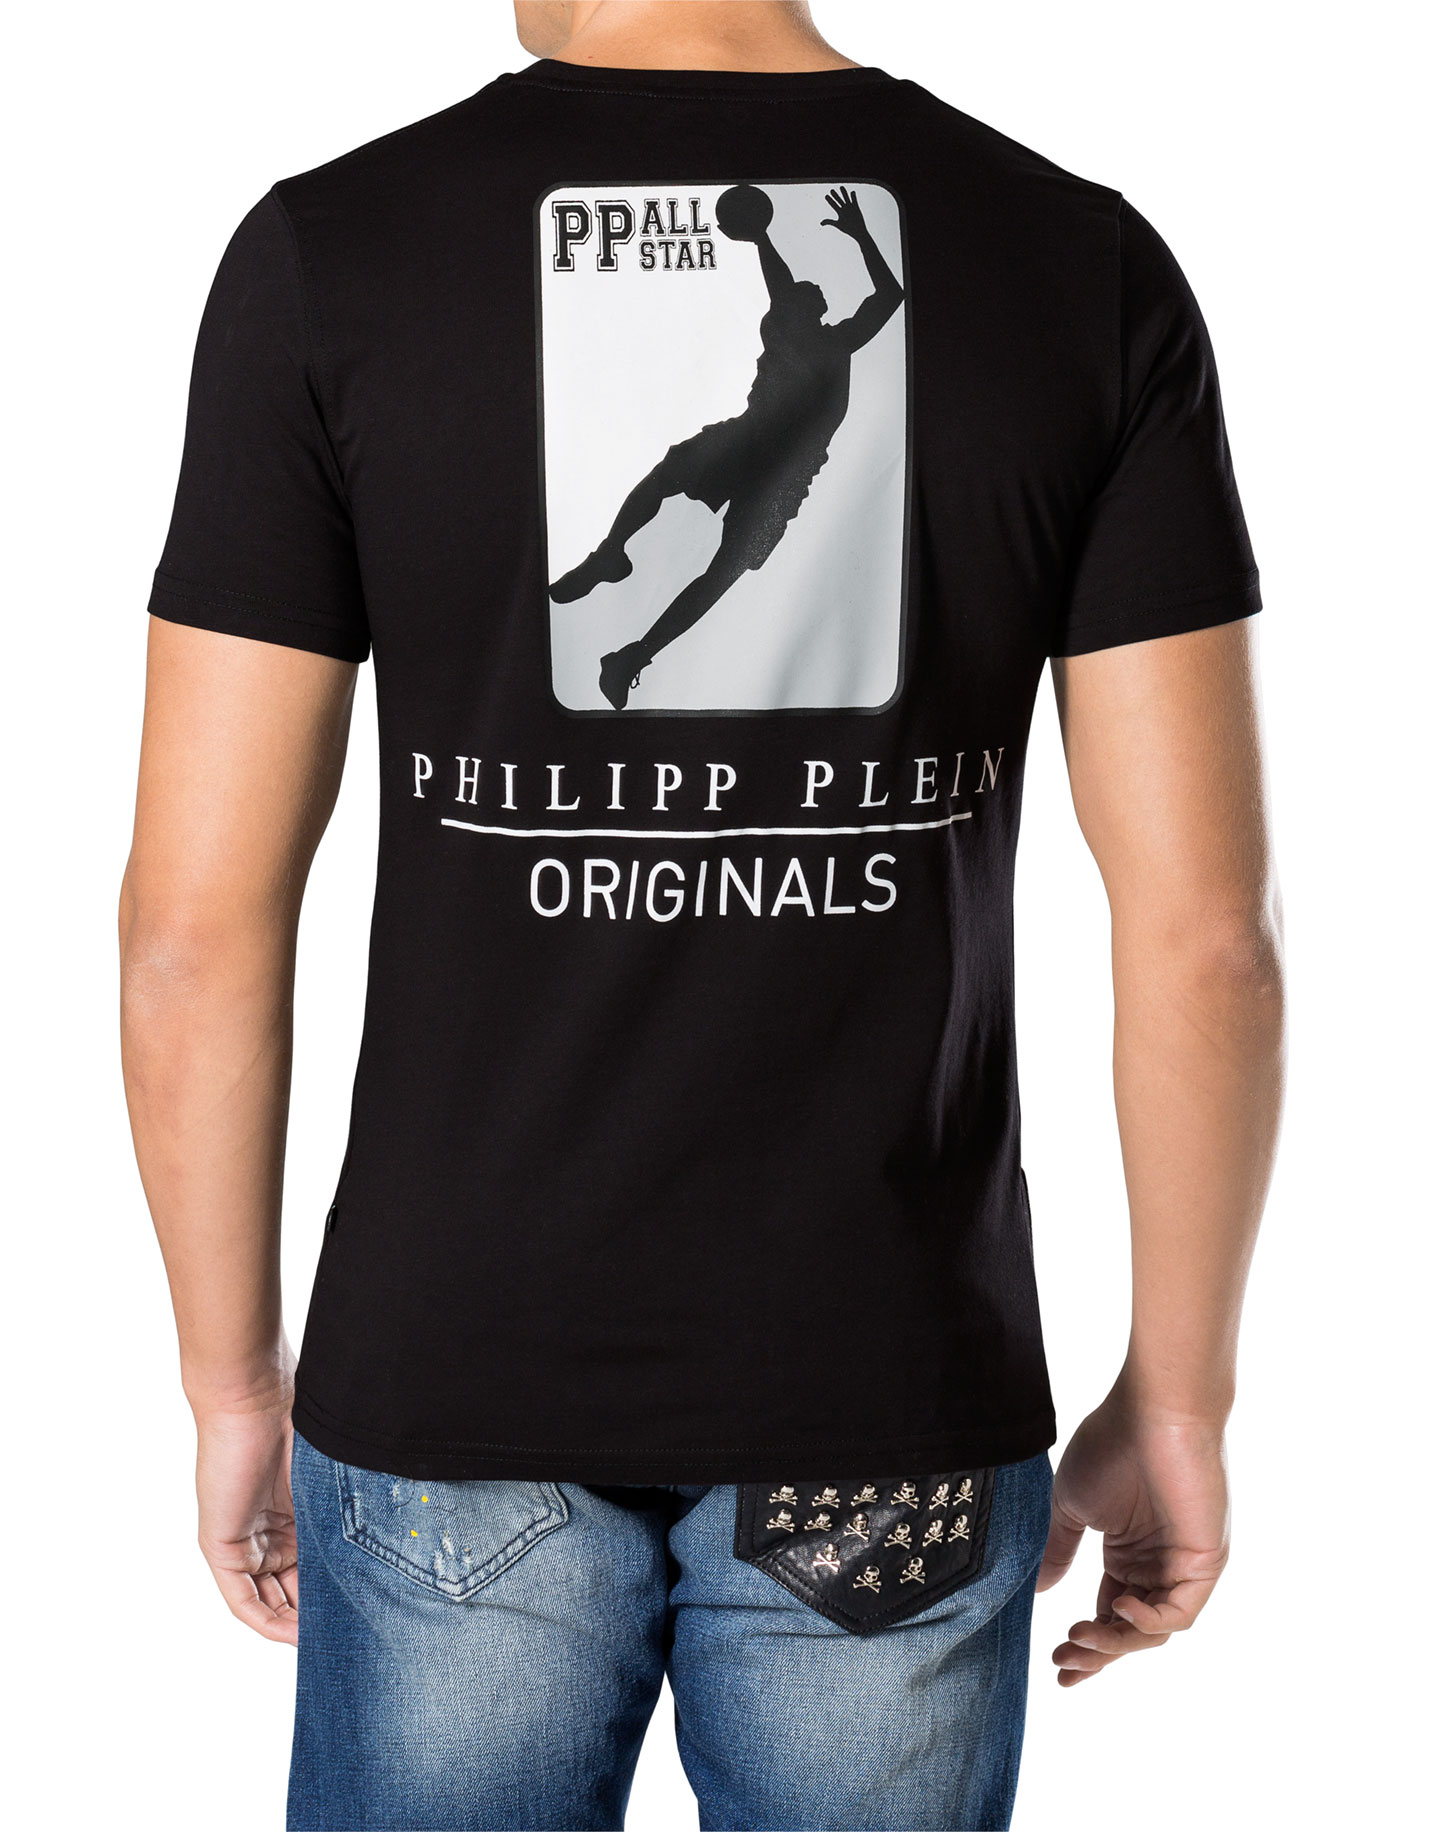 philipp plein all star t shirt